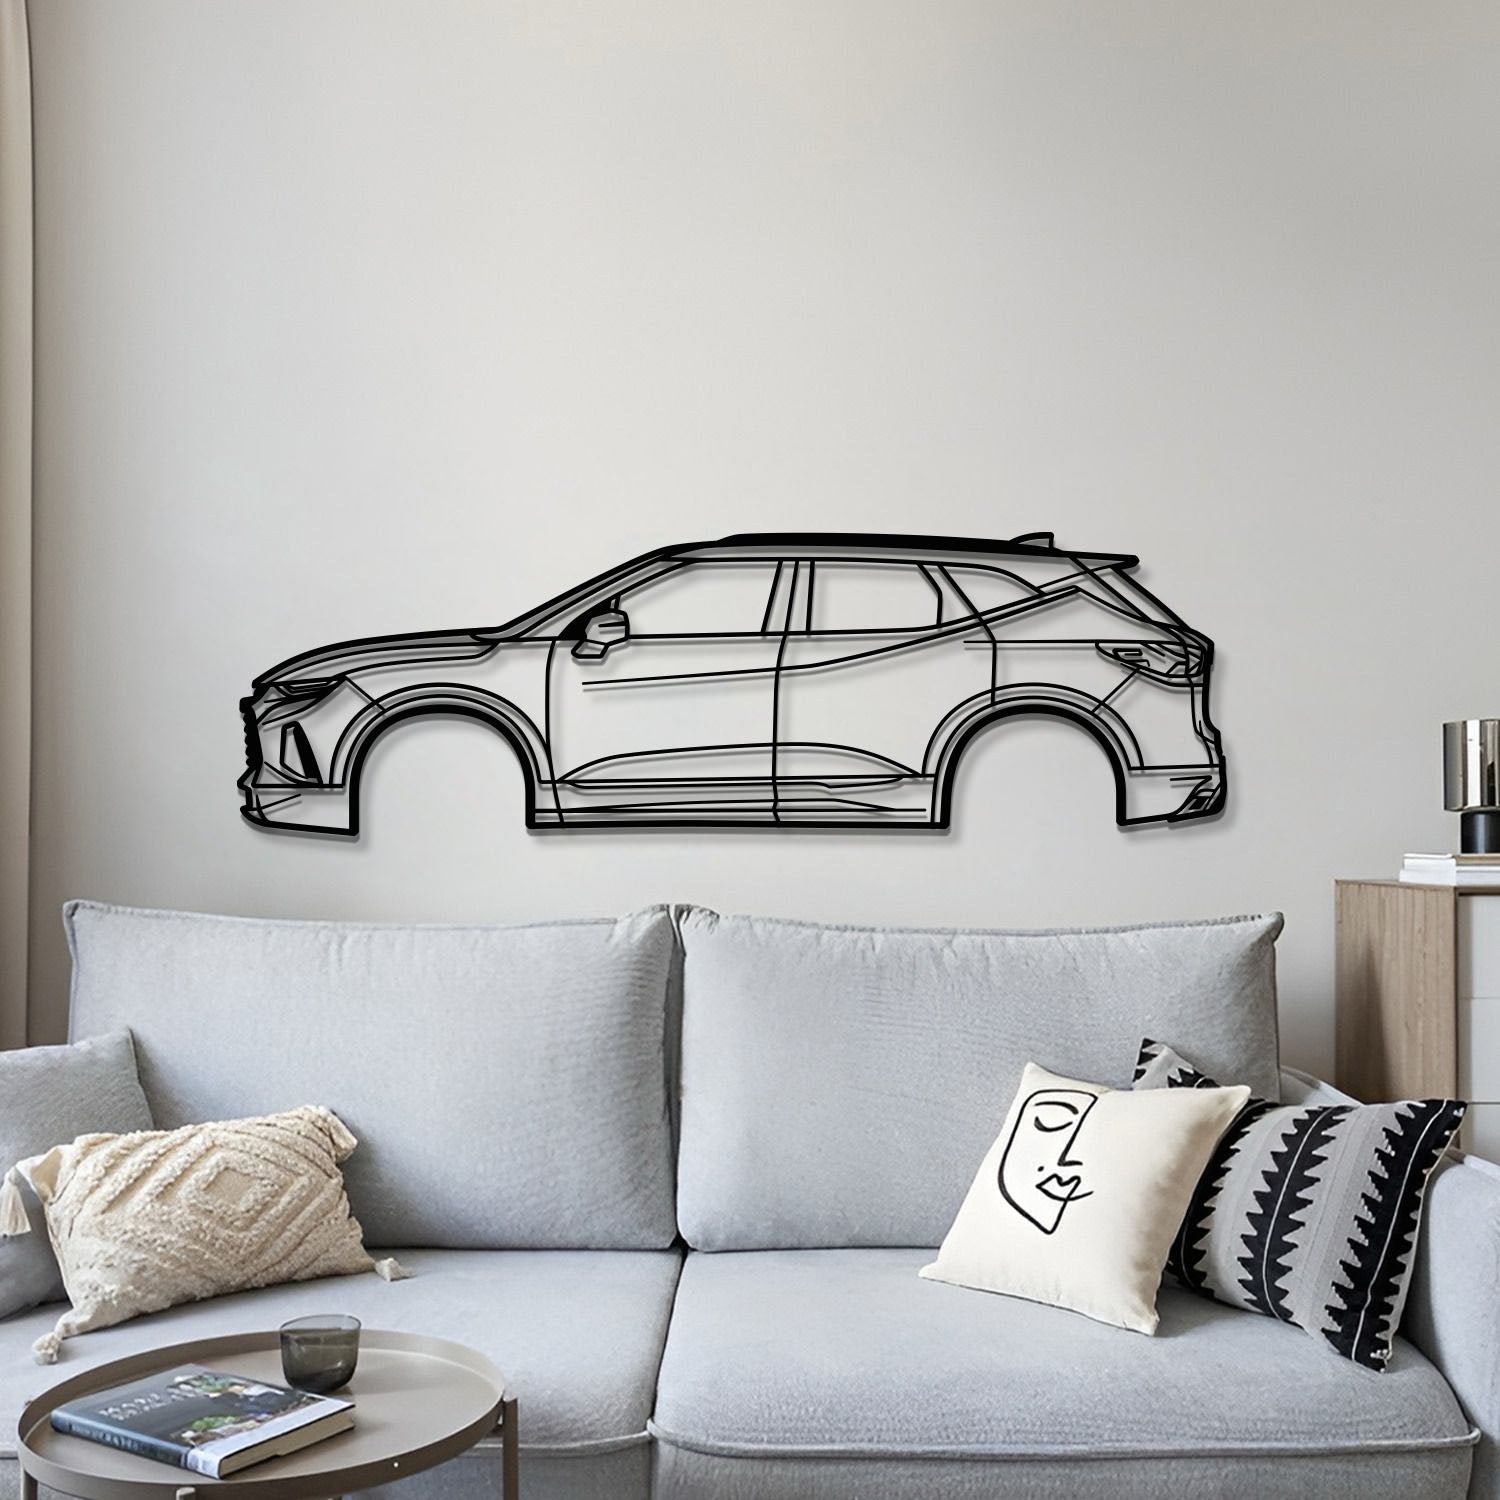 2019 Blazer 3rd Gen Metal Car Wall Art - MT0648